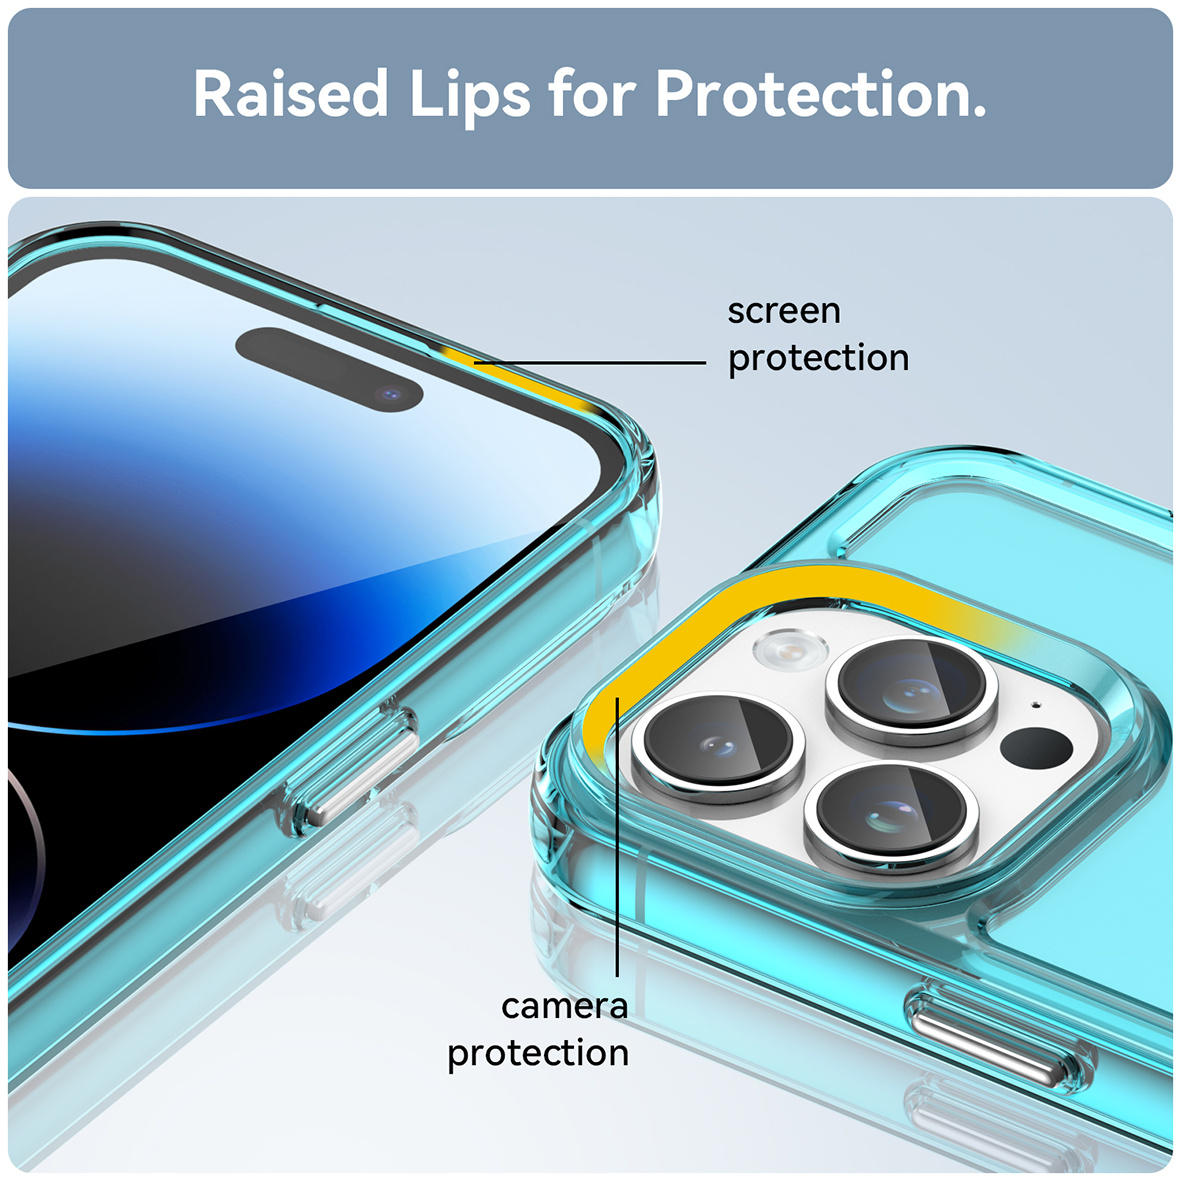 Protector cover funda para el Iphone 13 Pro Max Case Cover Moda